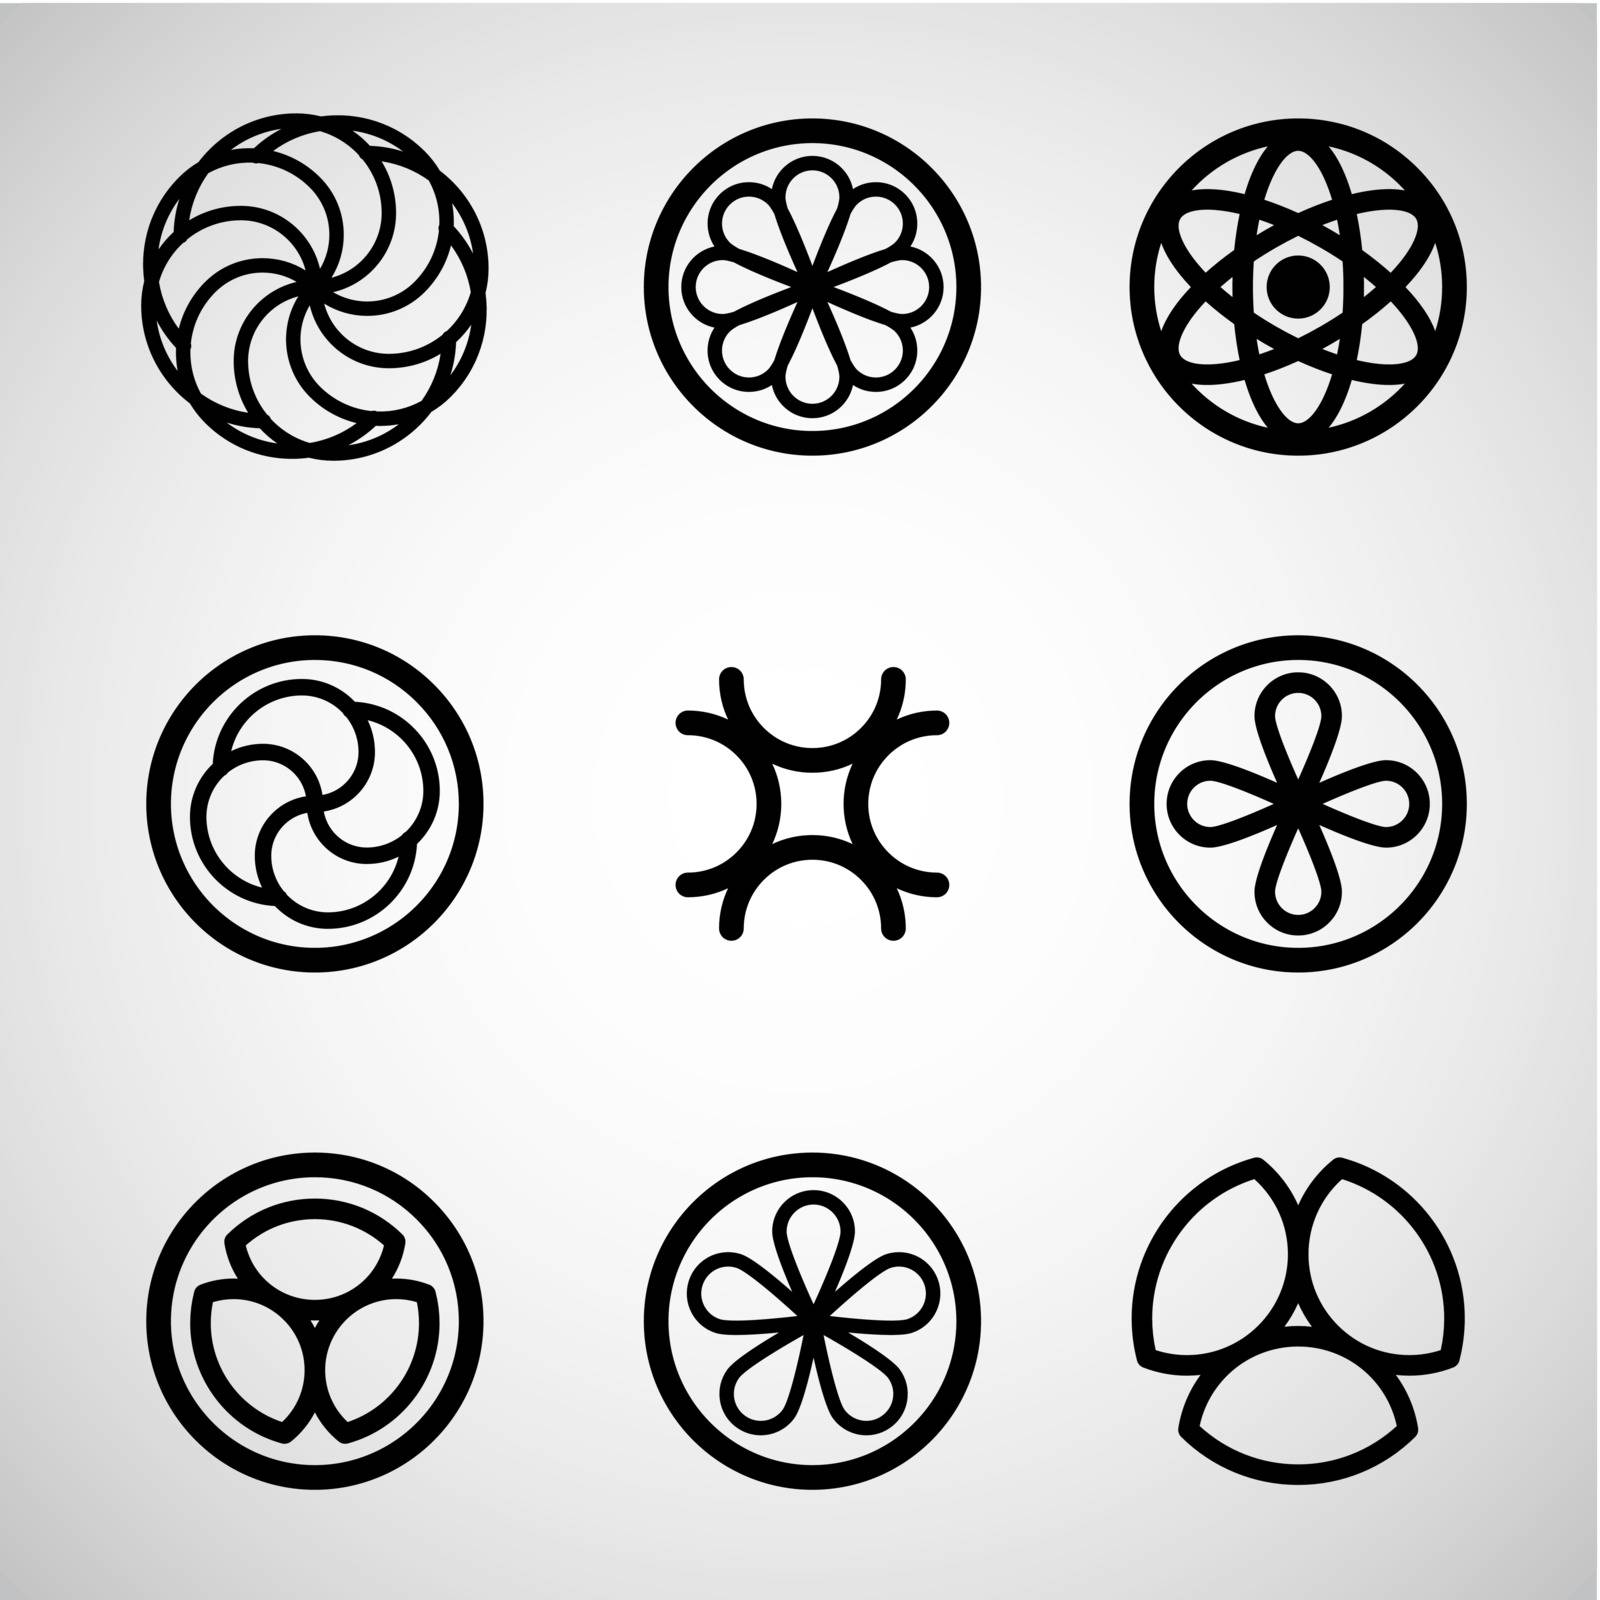 Round symbols vector abstract set.